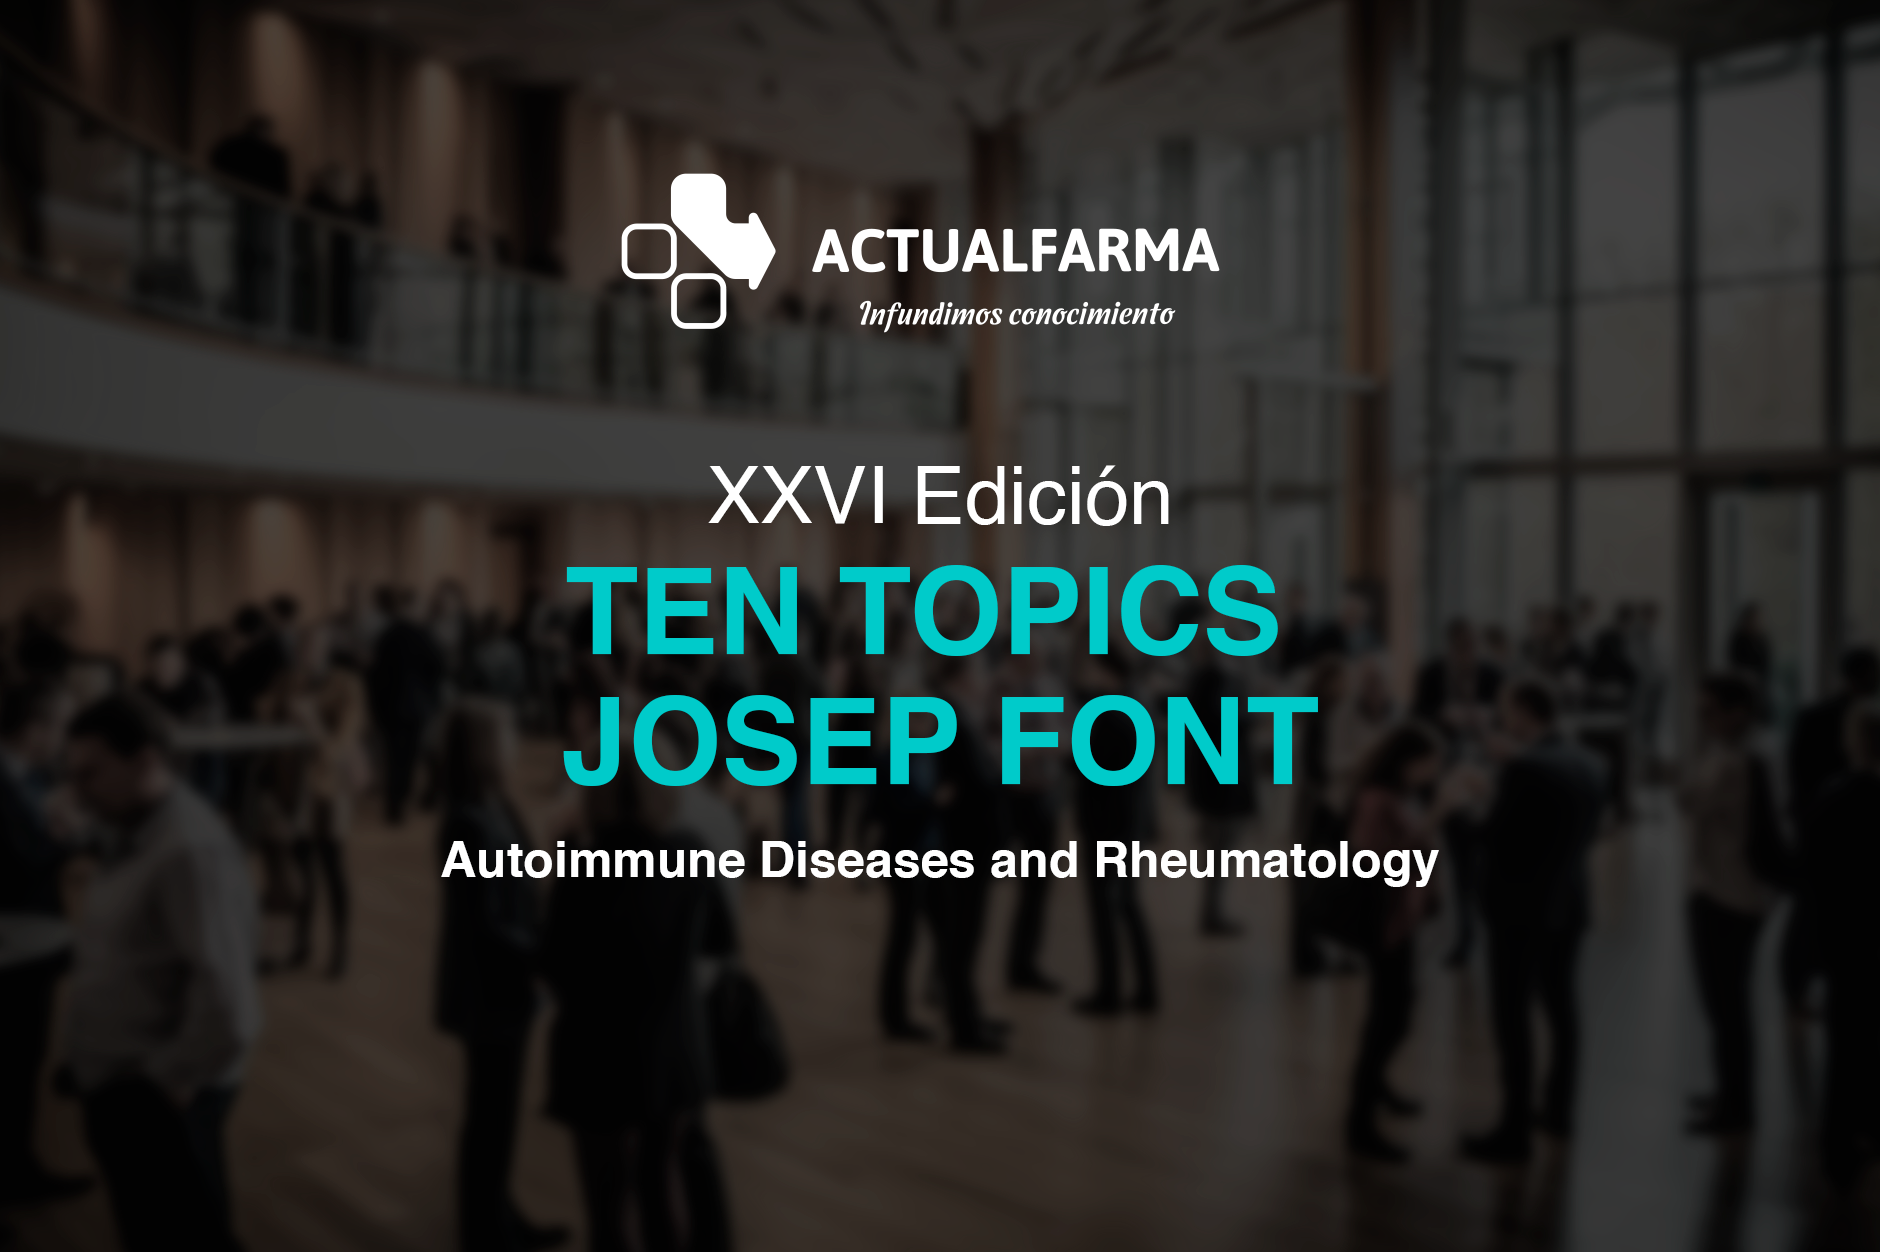 XXVI Ten Topics Josep Font